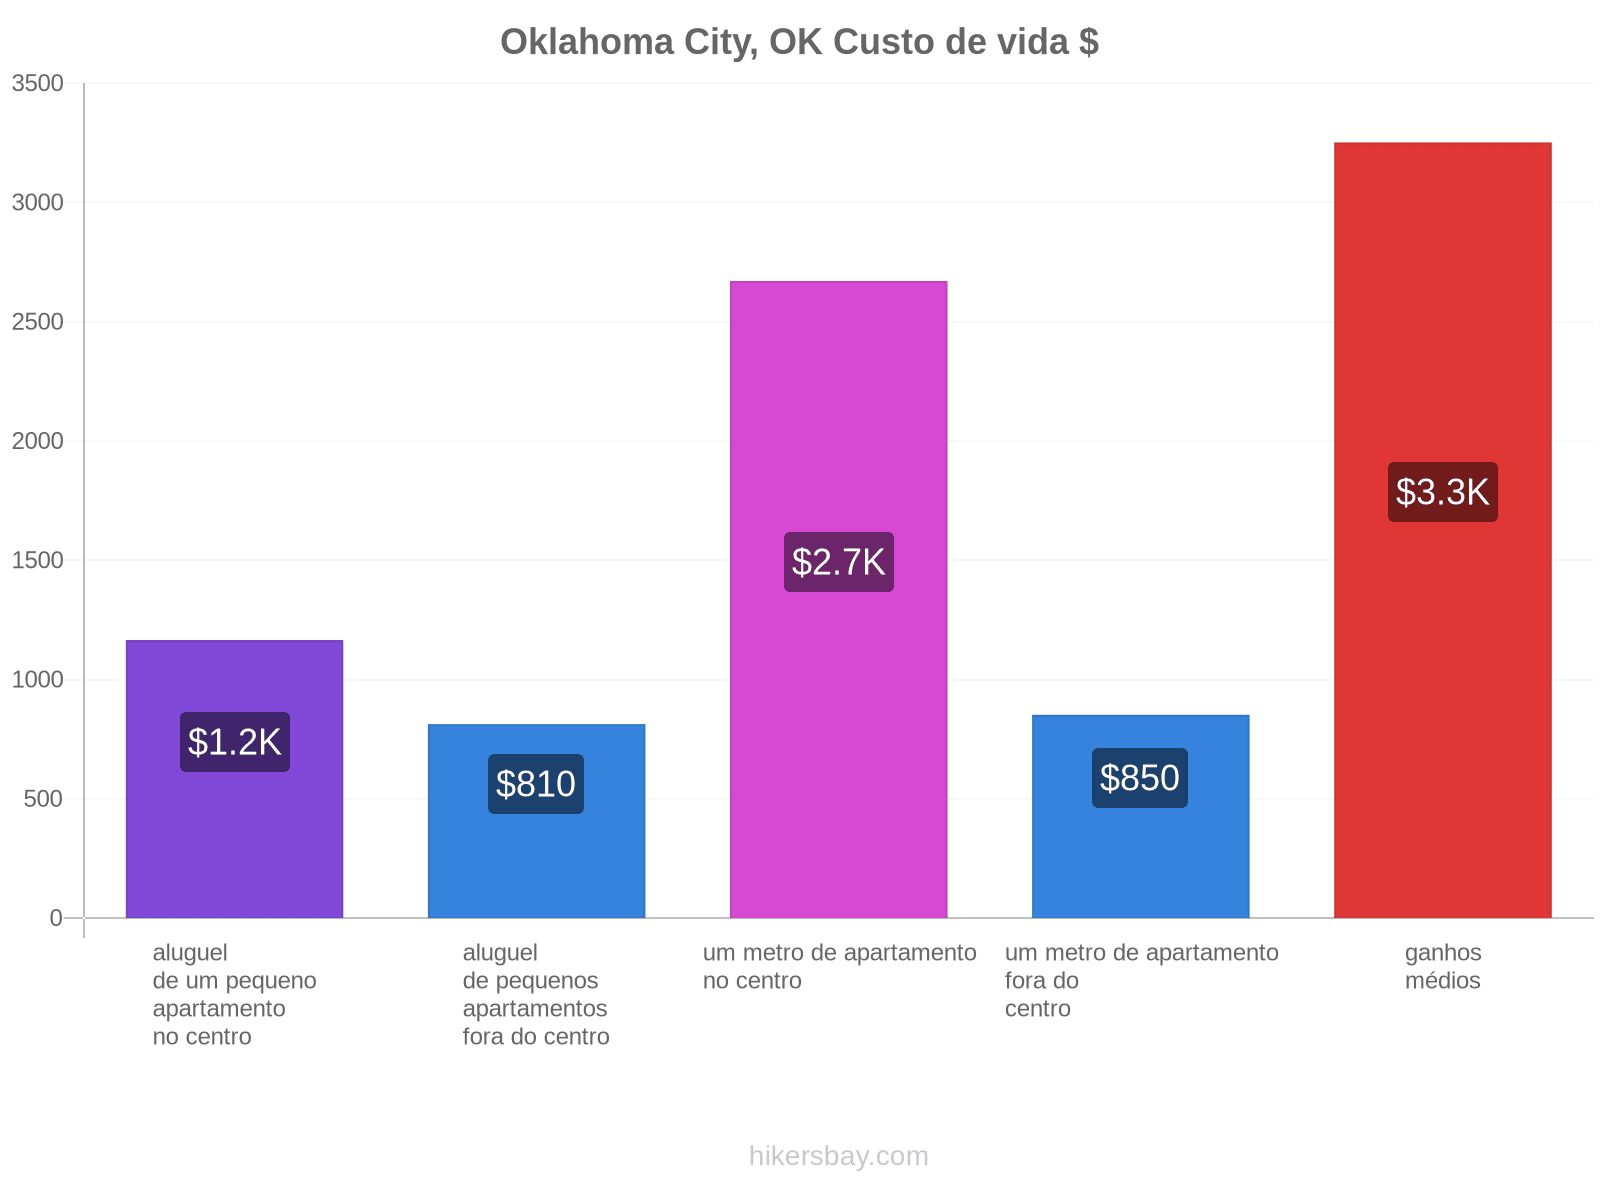 Oklahoma City, OK custo de vida hikersbay.com